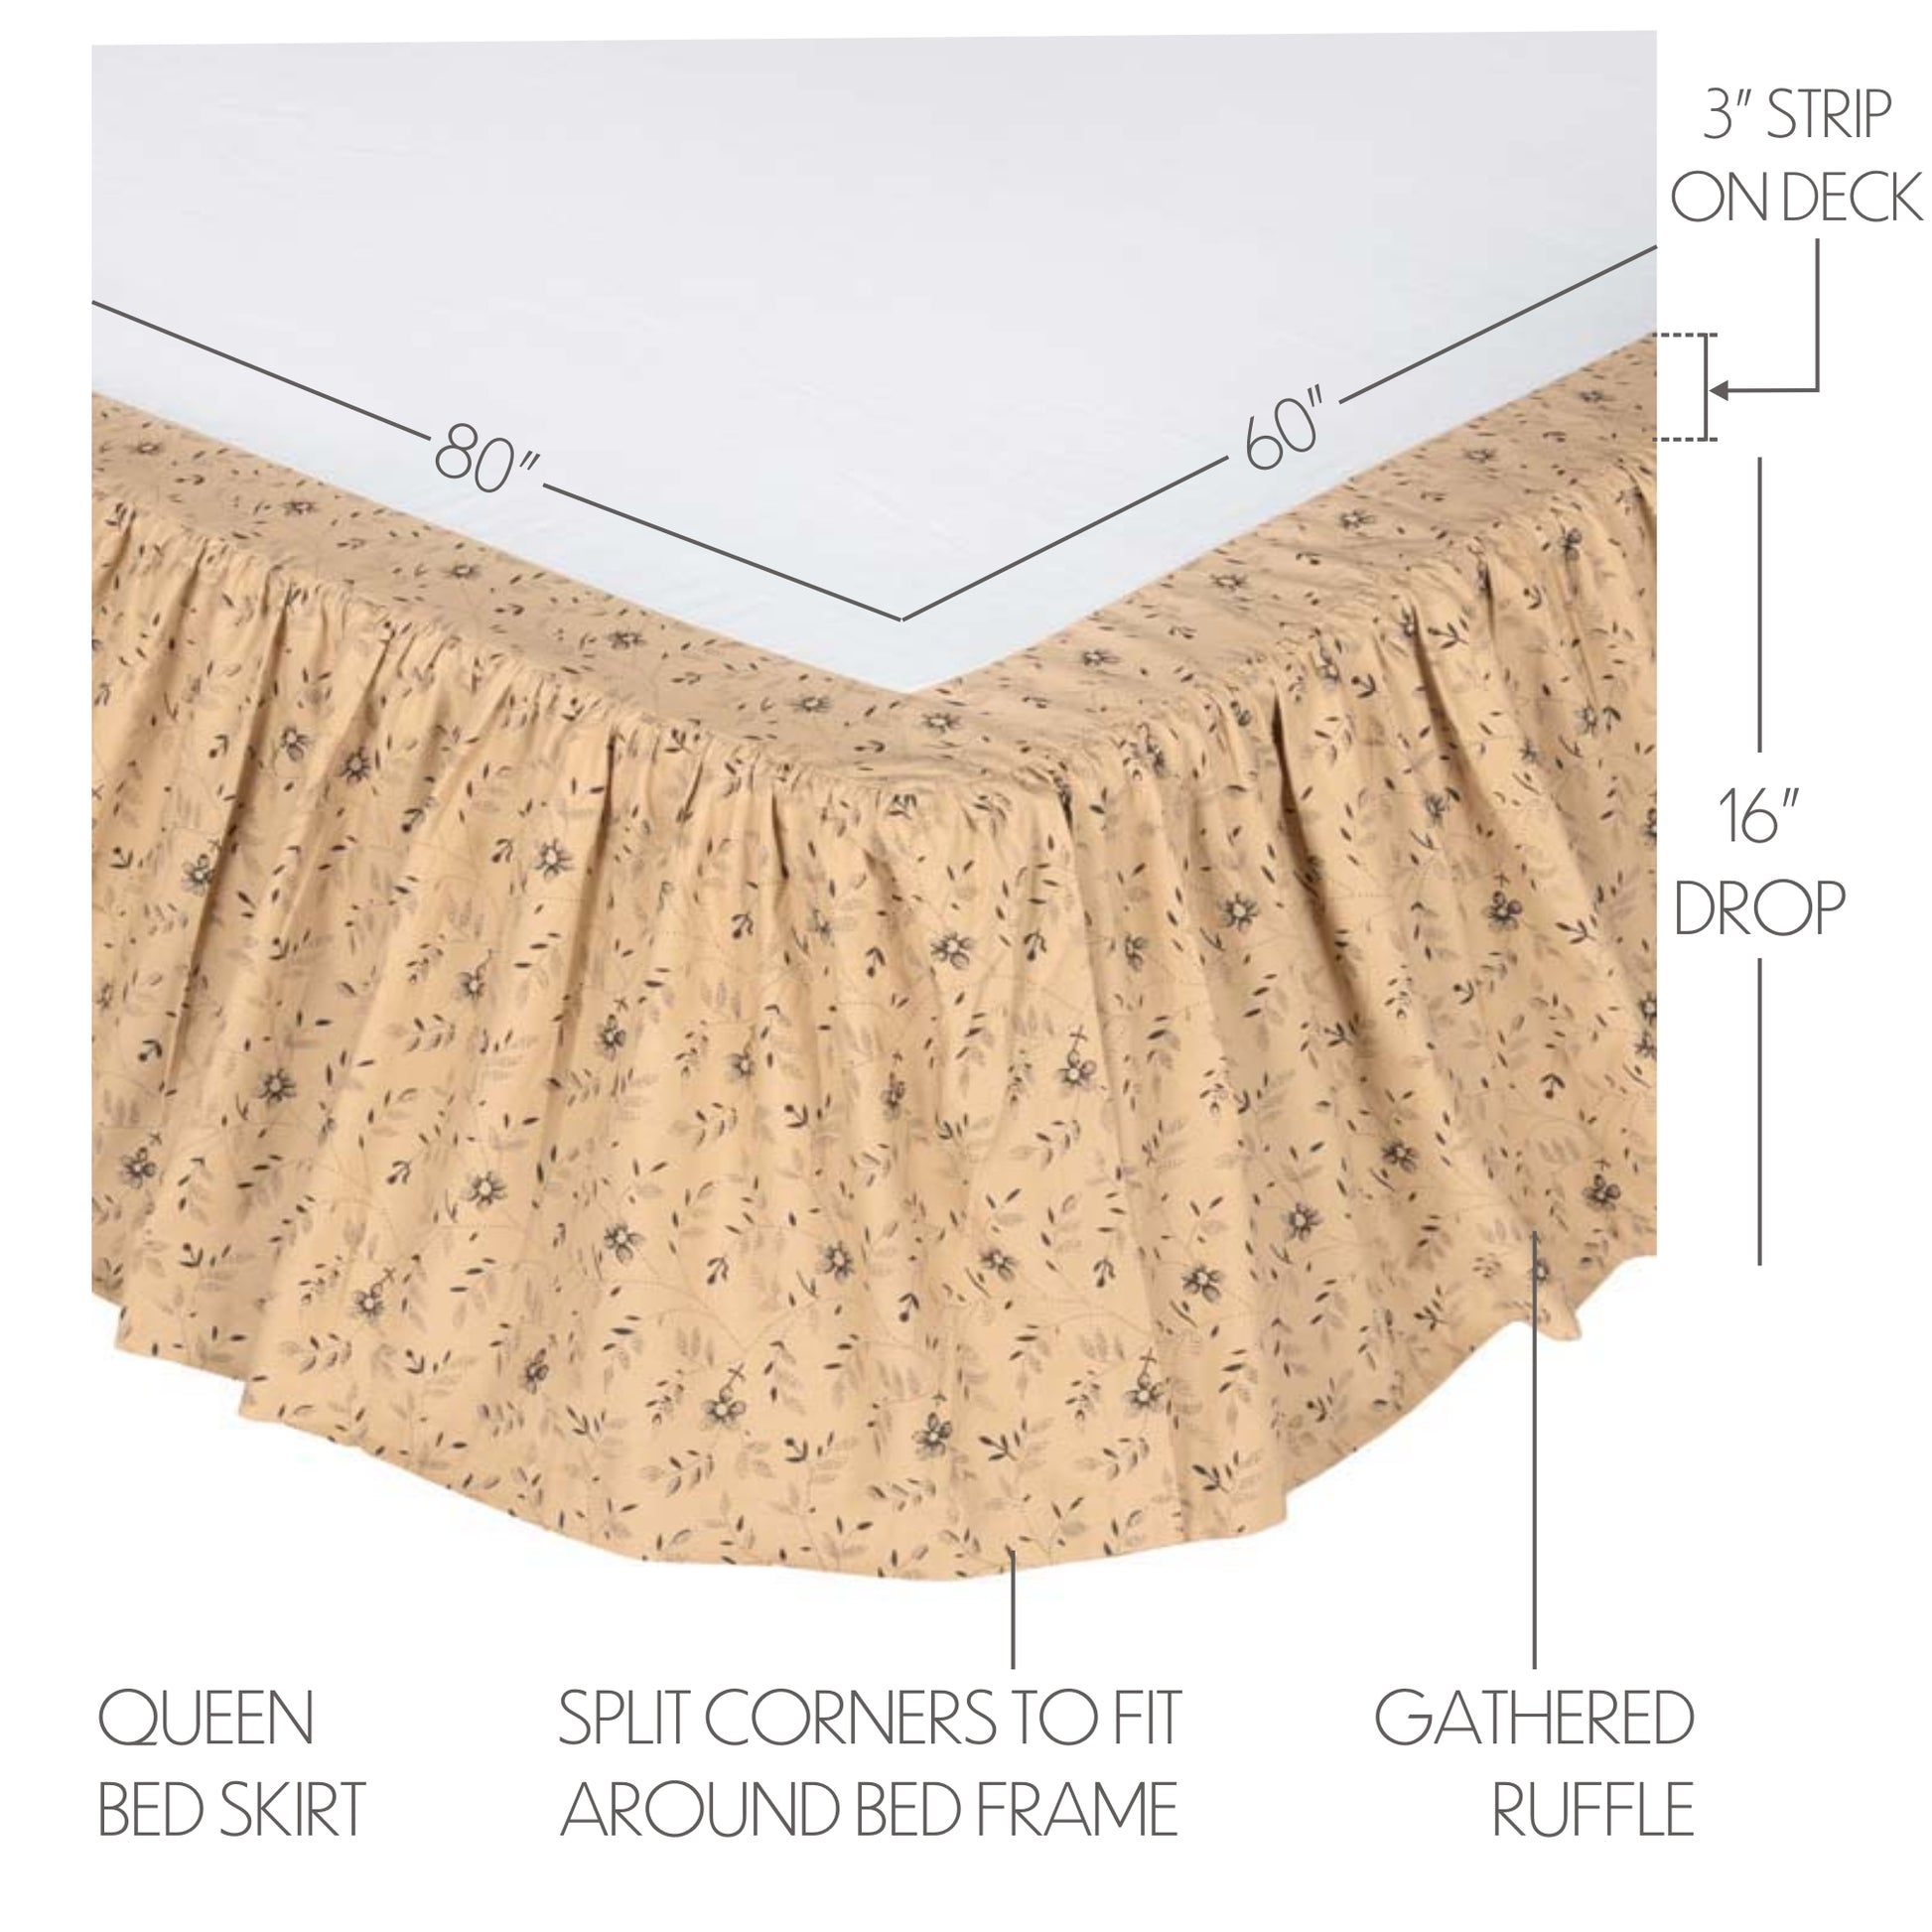 40379-Maisie-Queen-Bed-Skirt-60x80x16-image-1